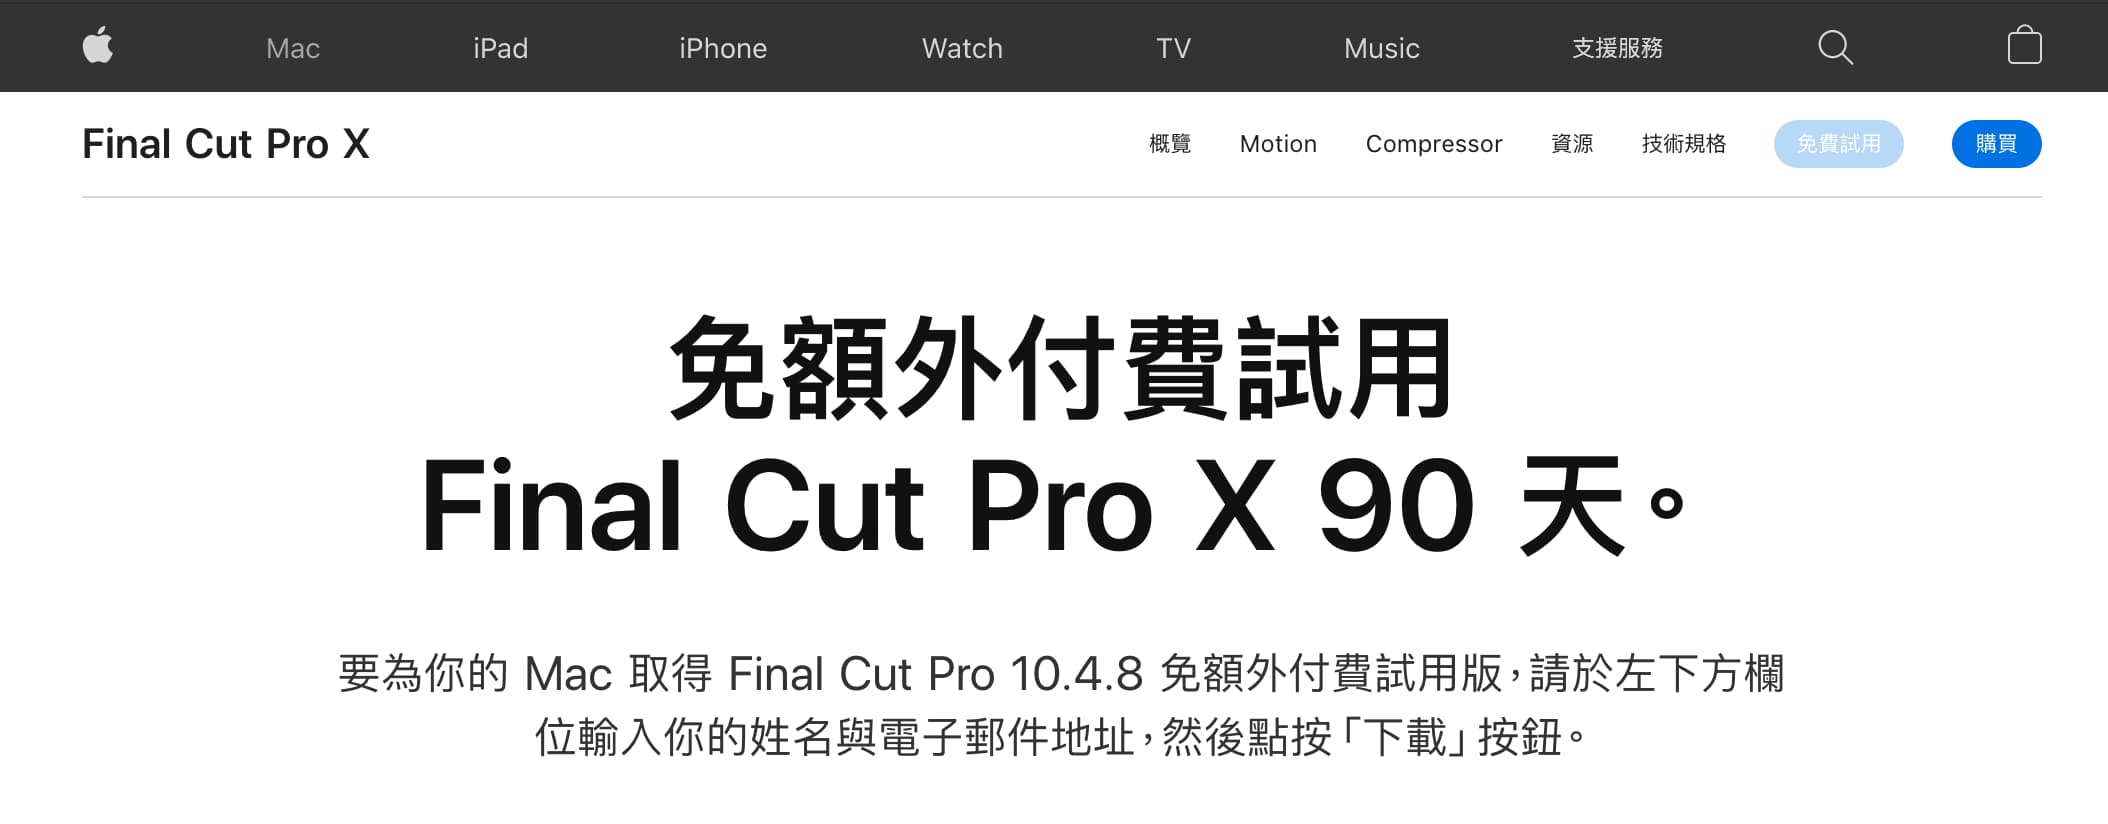 get final cut pro x for free mac